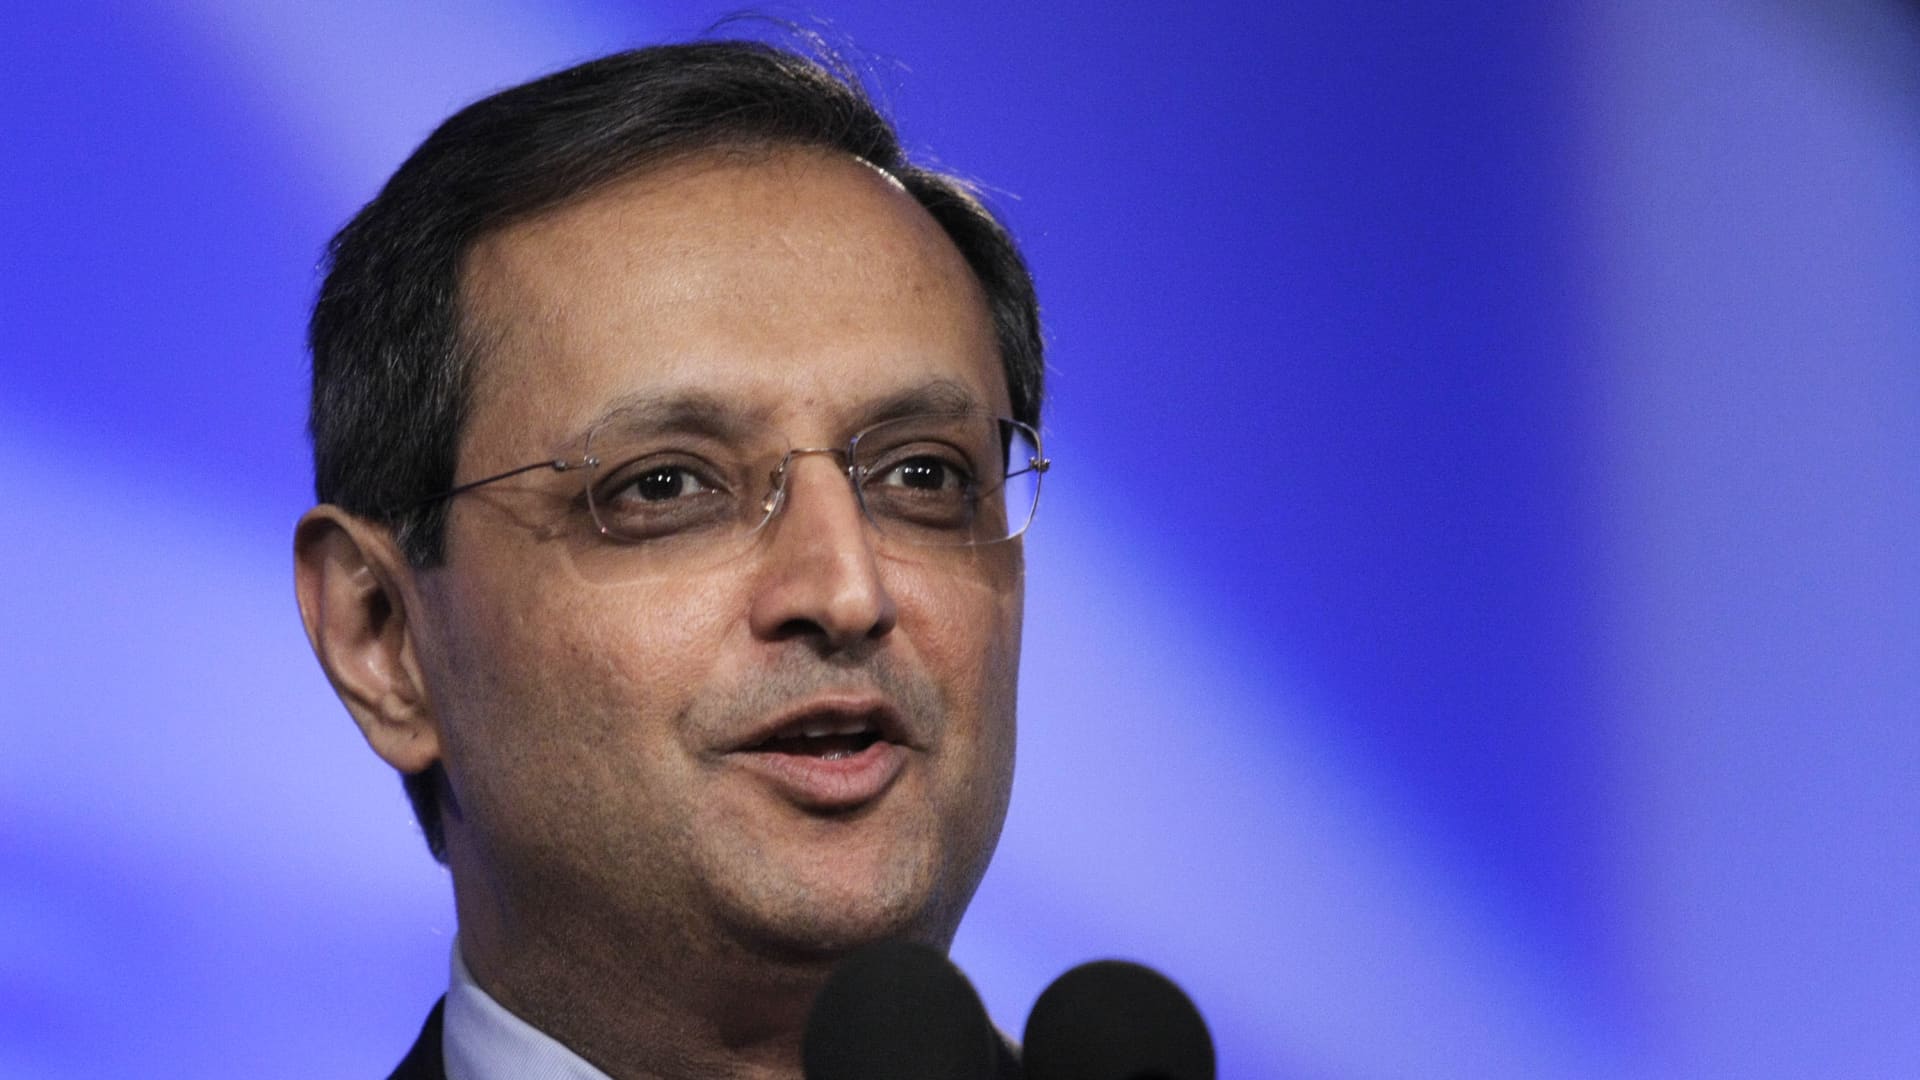 Vikram Pandit, former-CEO of Citigroup speaking in June 15, 2009 in Detroit, Michigan.